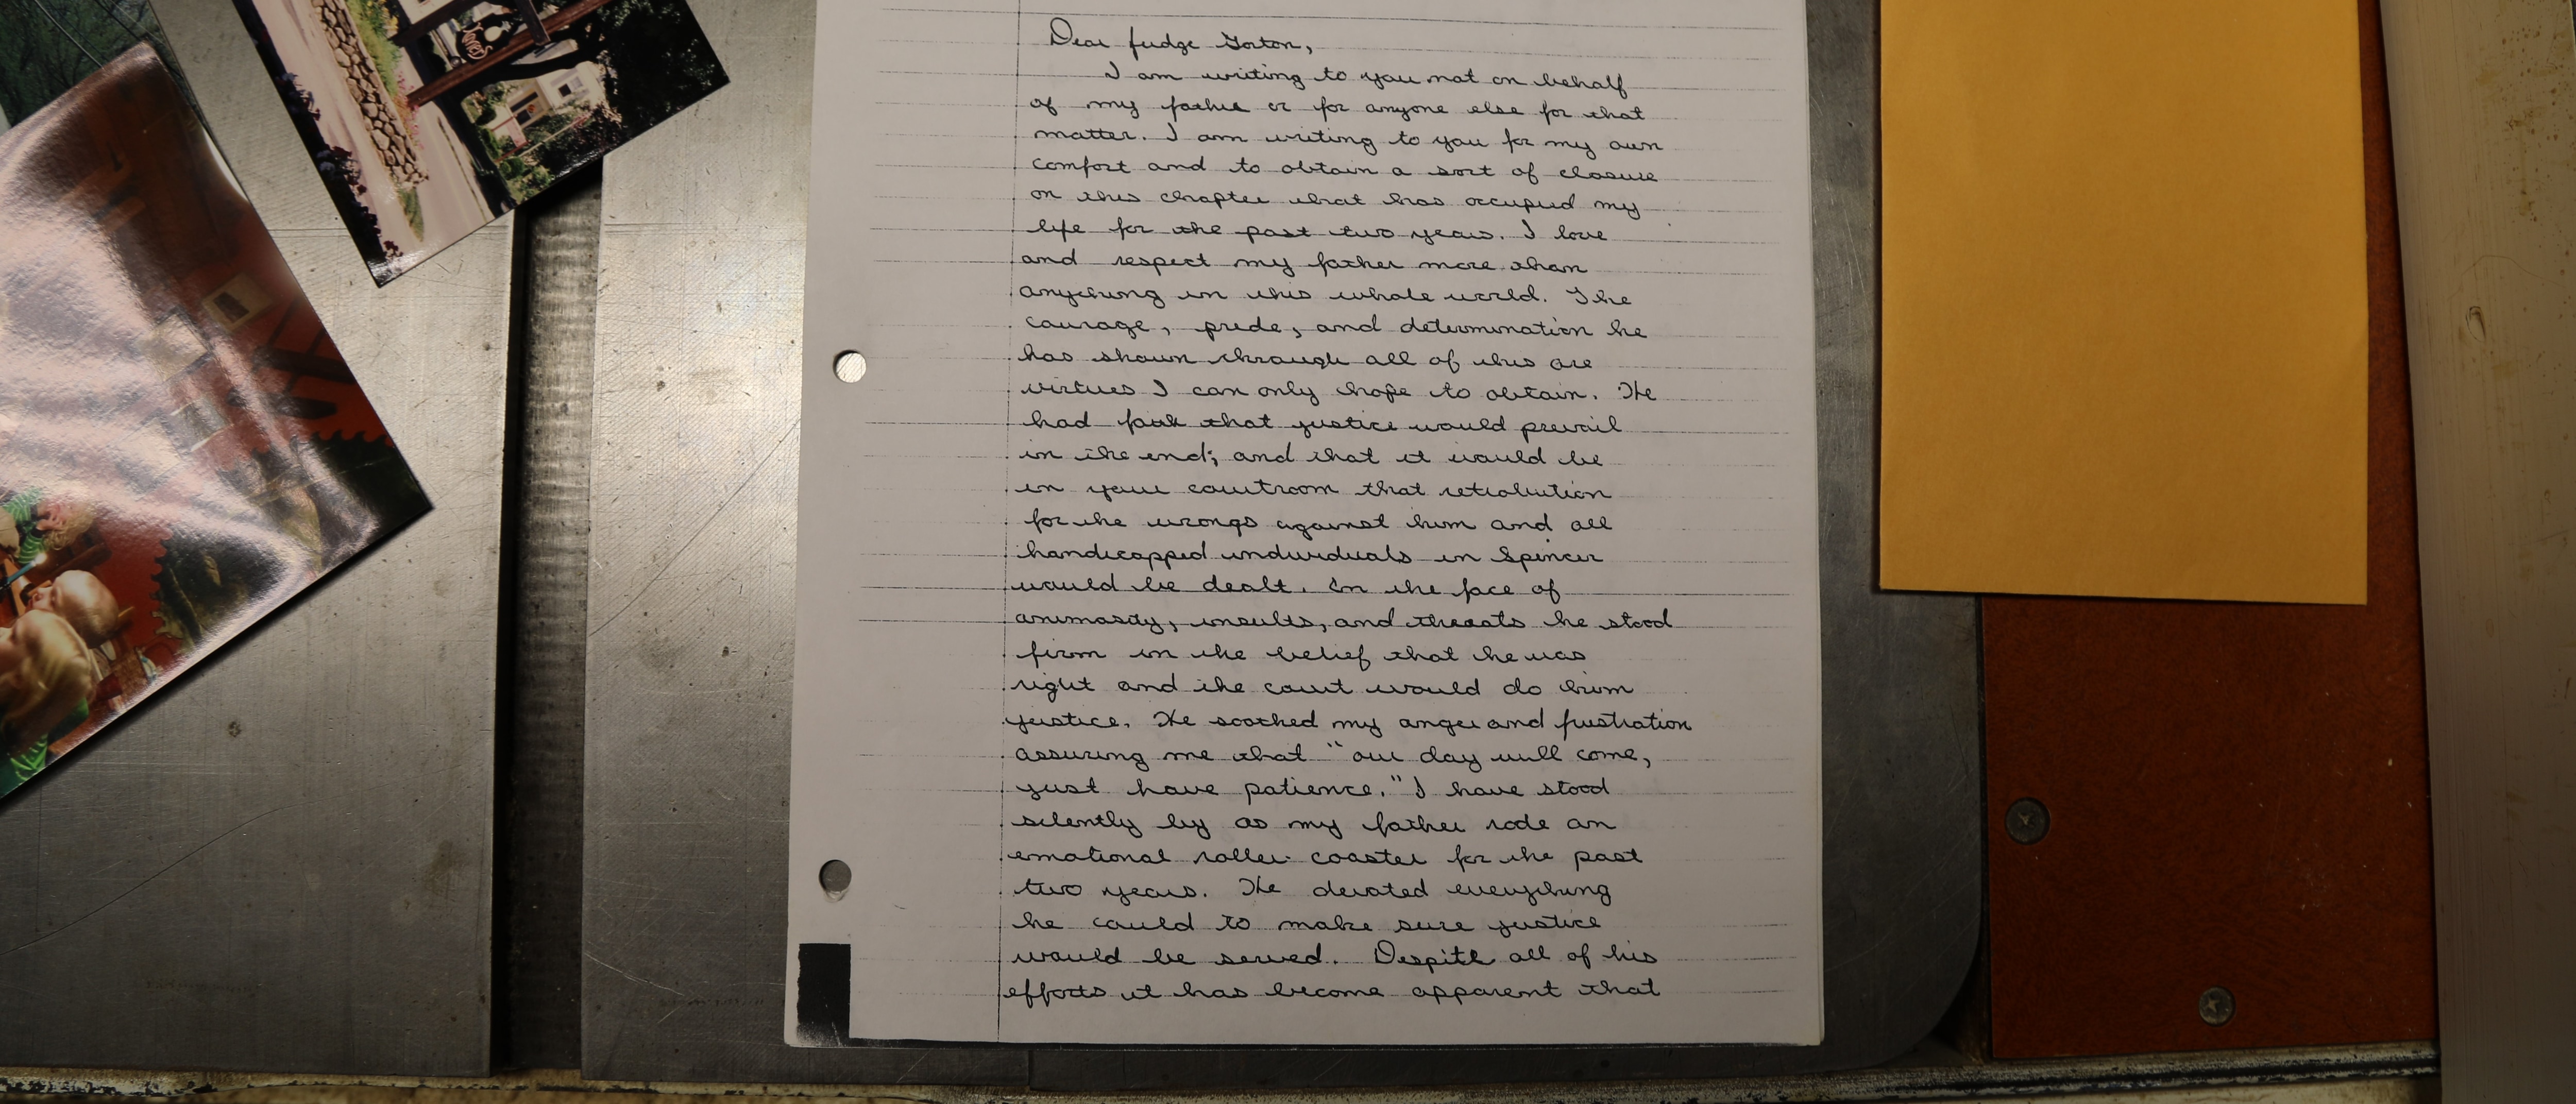 A handwritten letter from Damon Hopkins to Judge Gorton